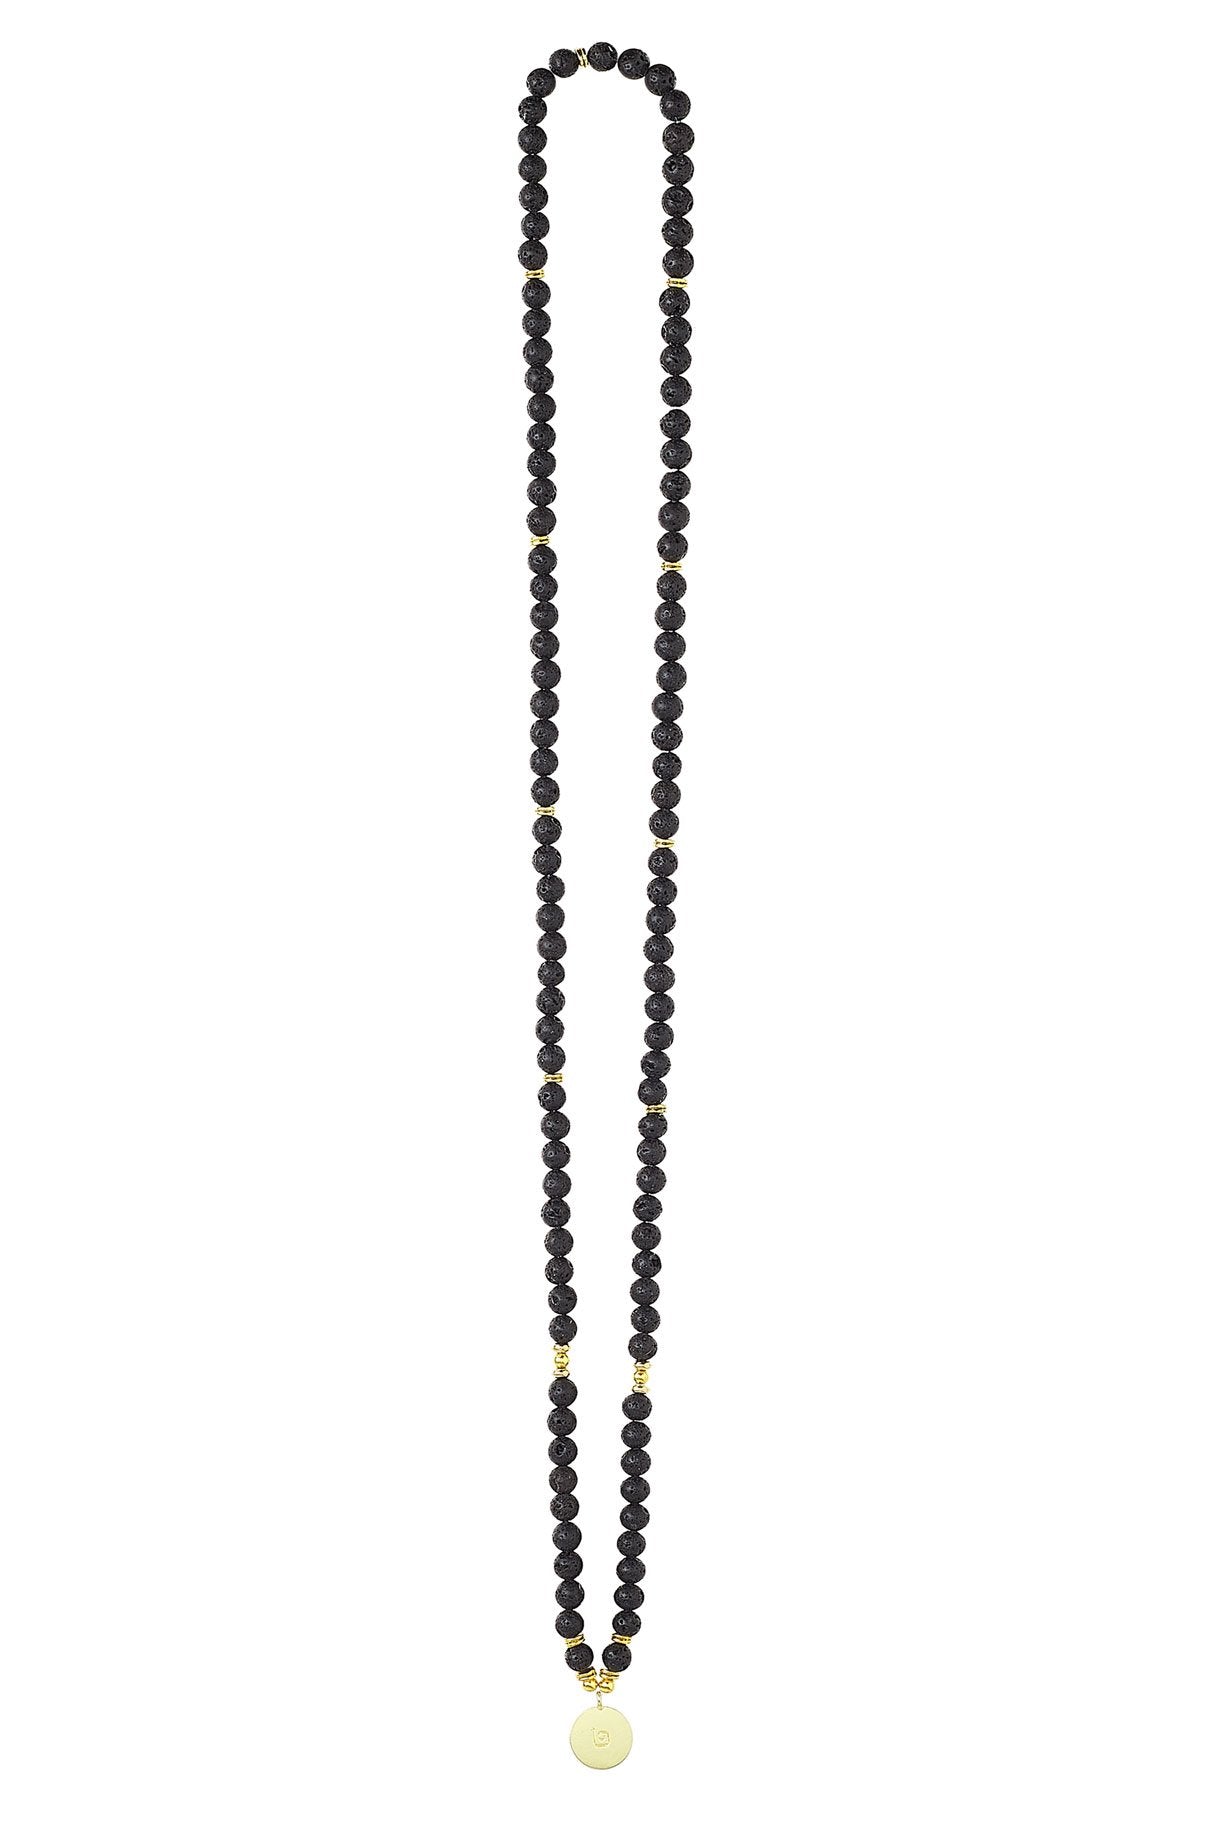 Stylish black Kavyx Mala necklace jewelry with a touch of elegance - OW-0165-UJY-BK_2.jpg.